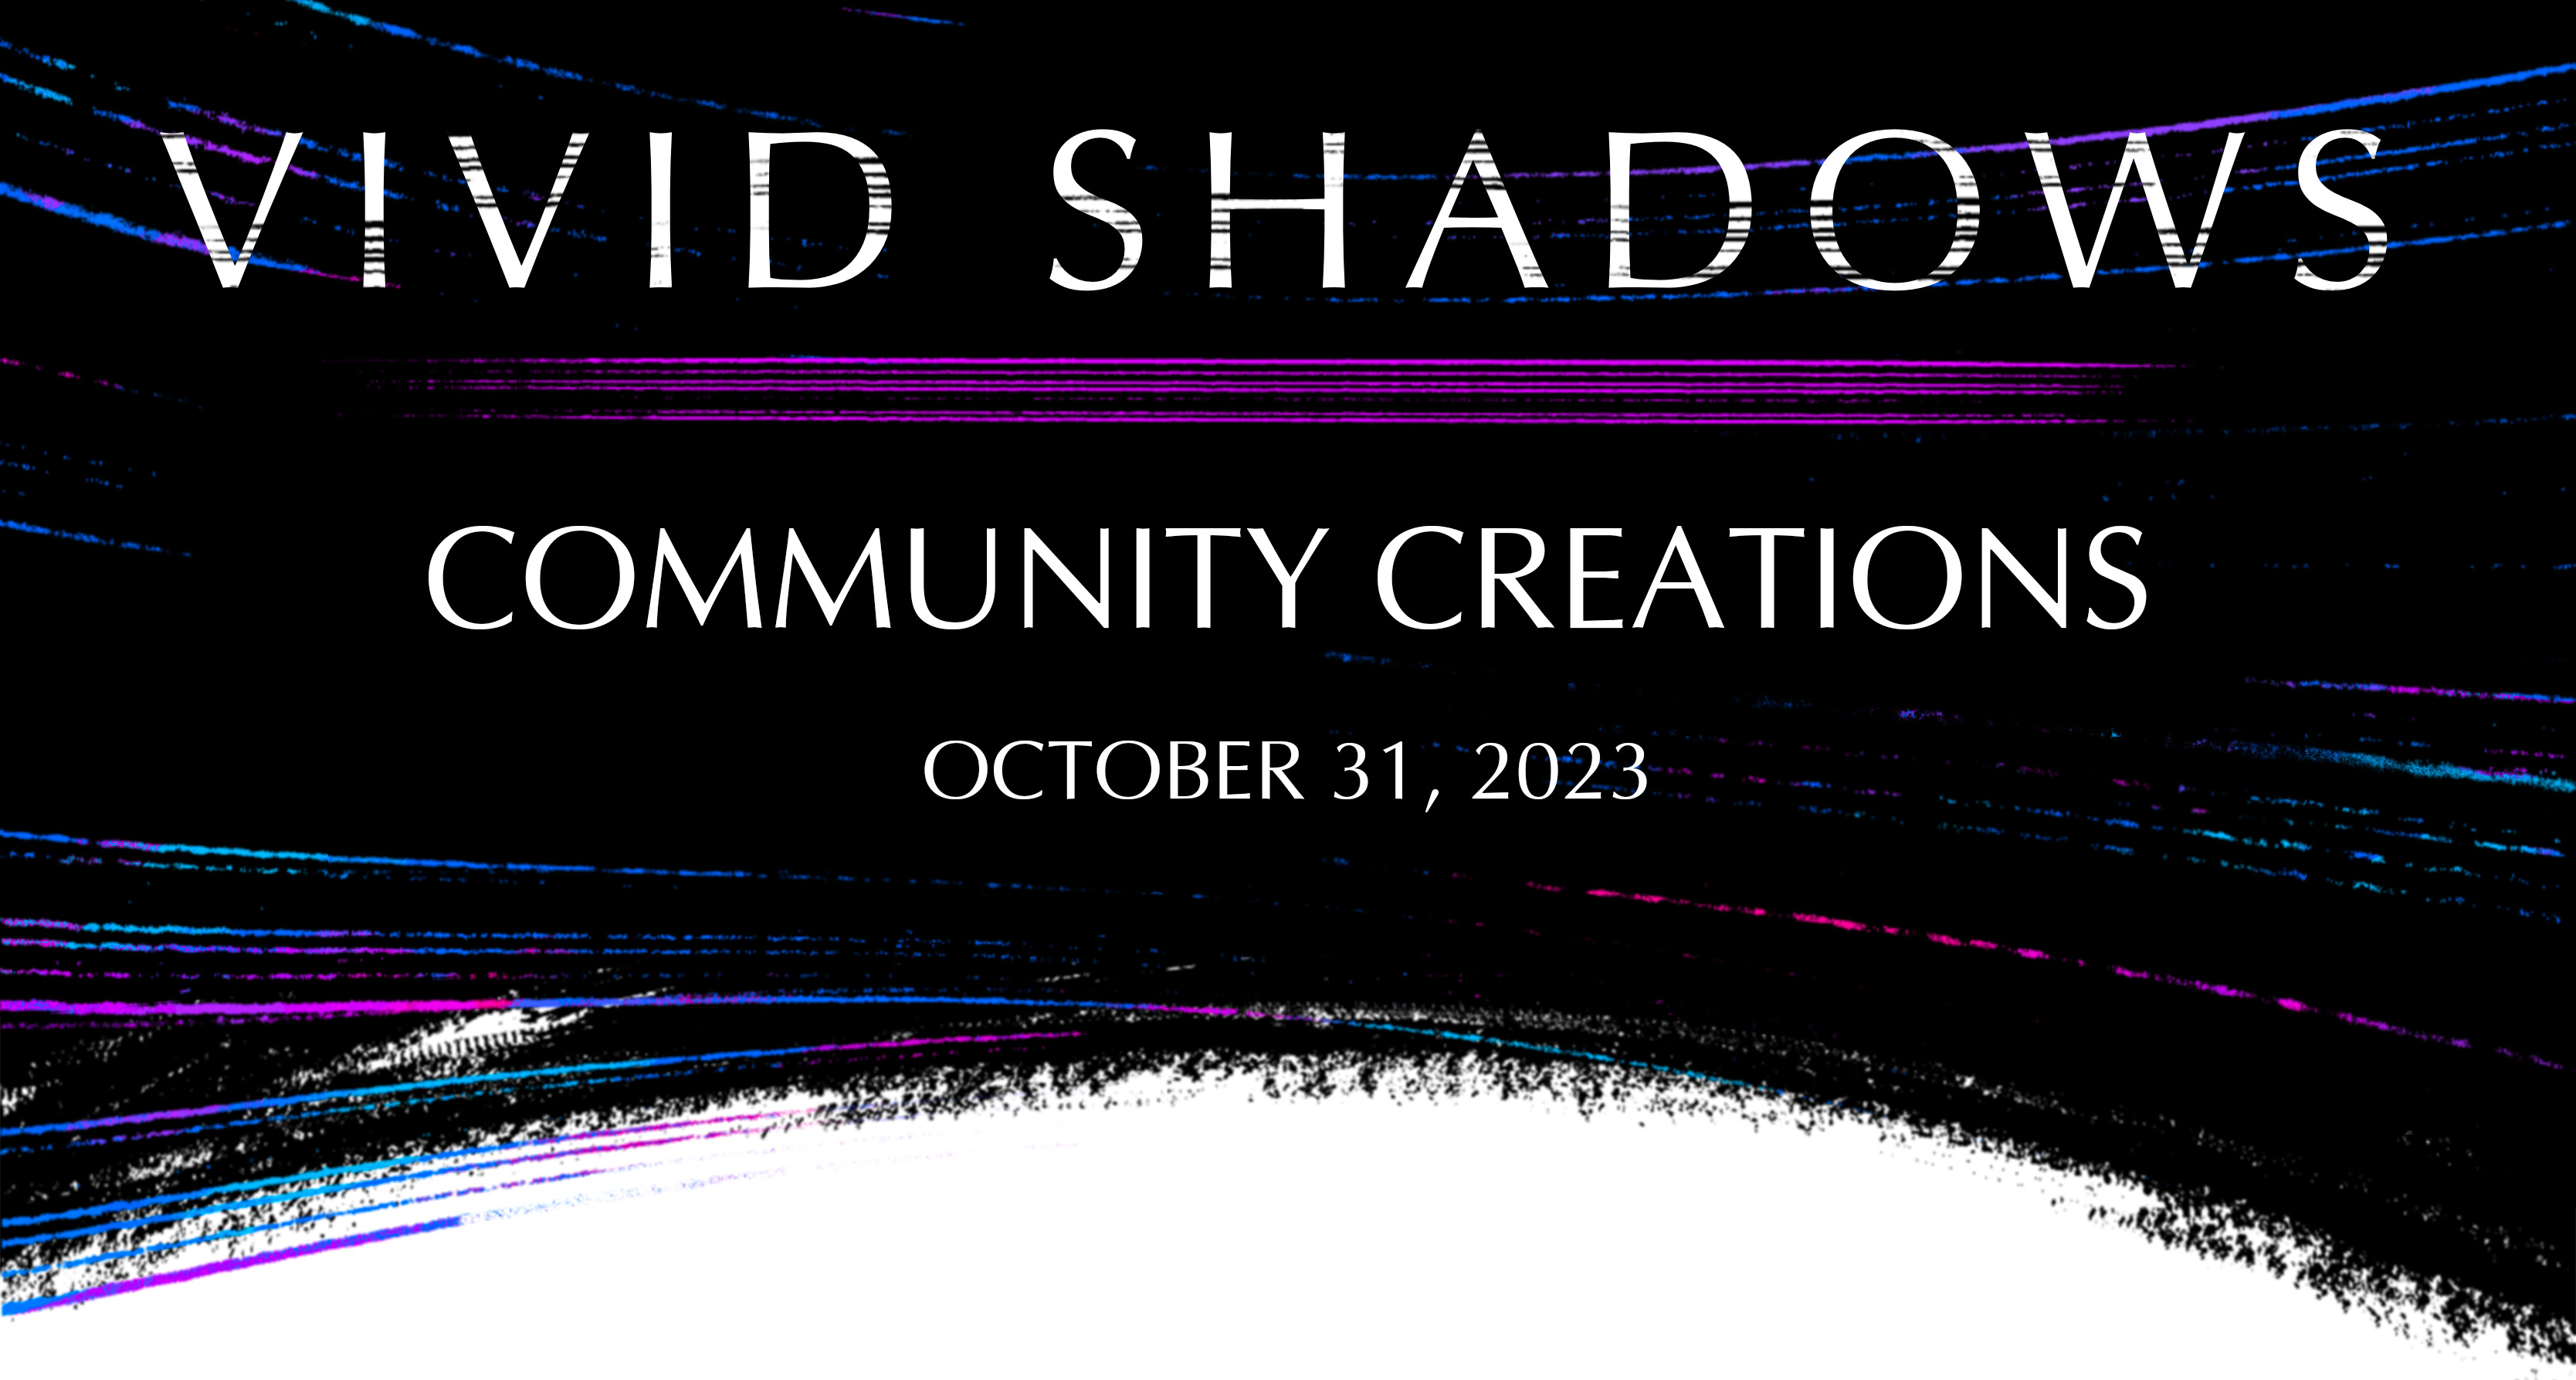 Vivid Shadows 2023 - Community Creations